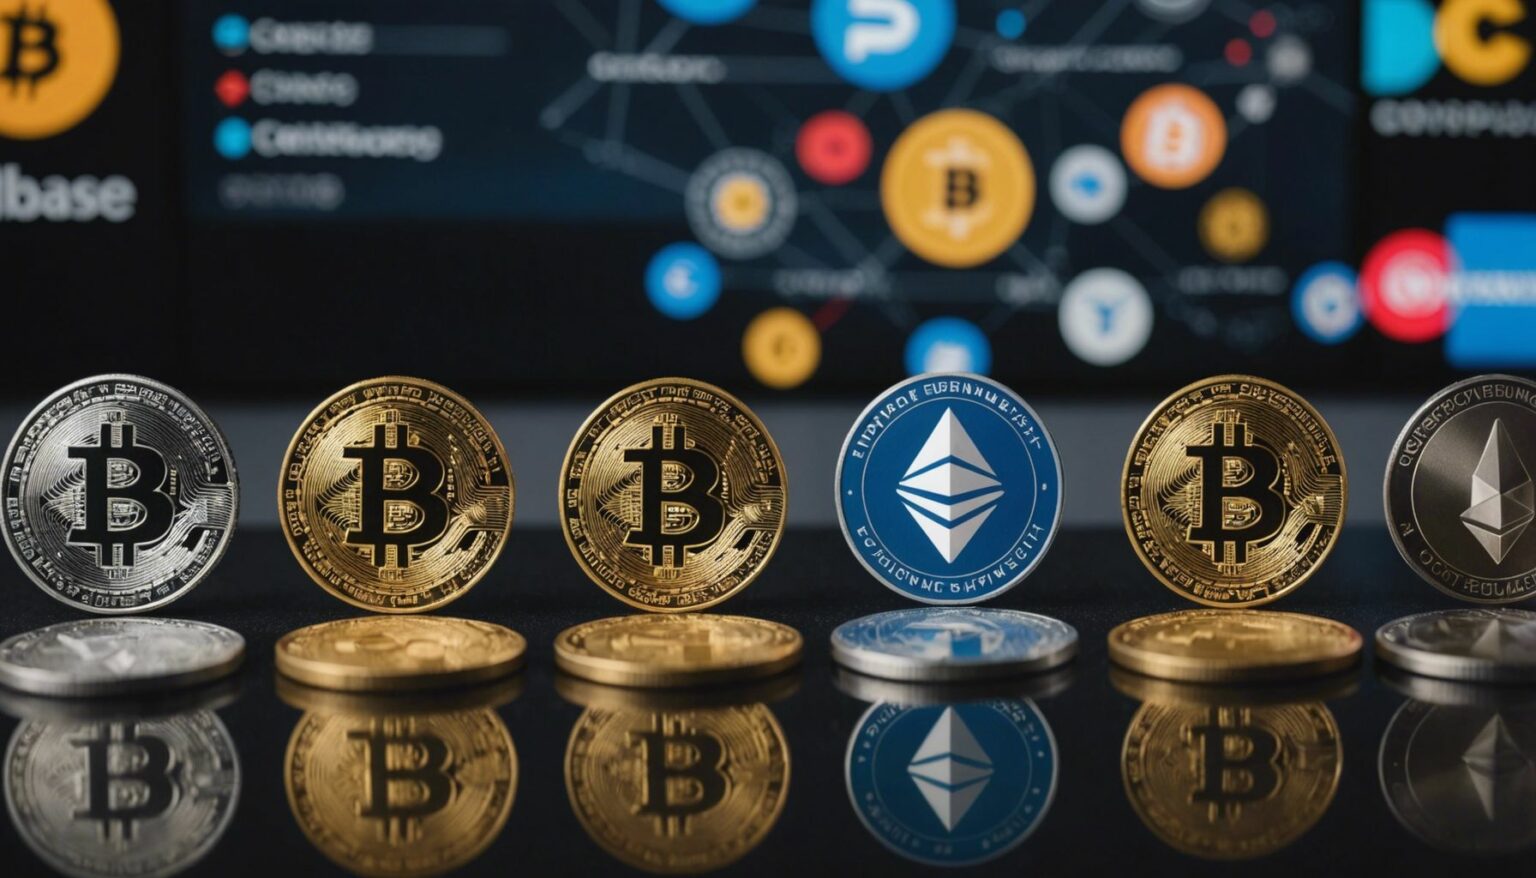 Emerging cryptocurrency exchanges logos surrounding Coinbase logo, symbolizing market competition.